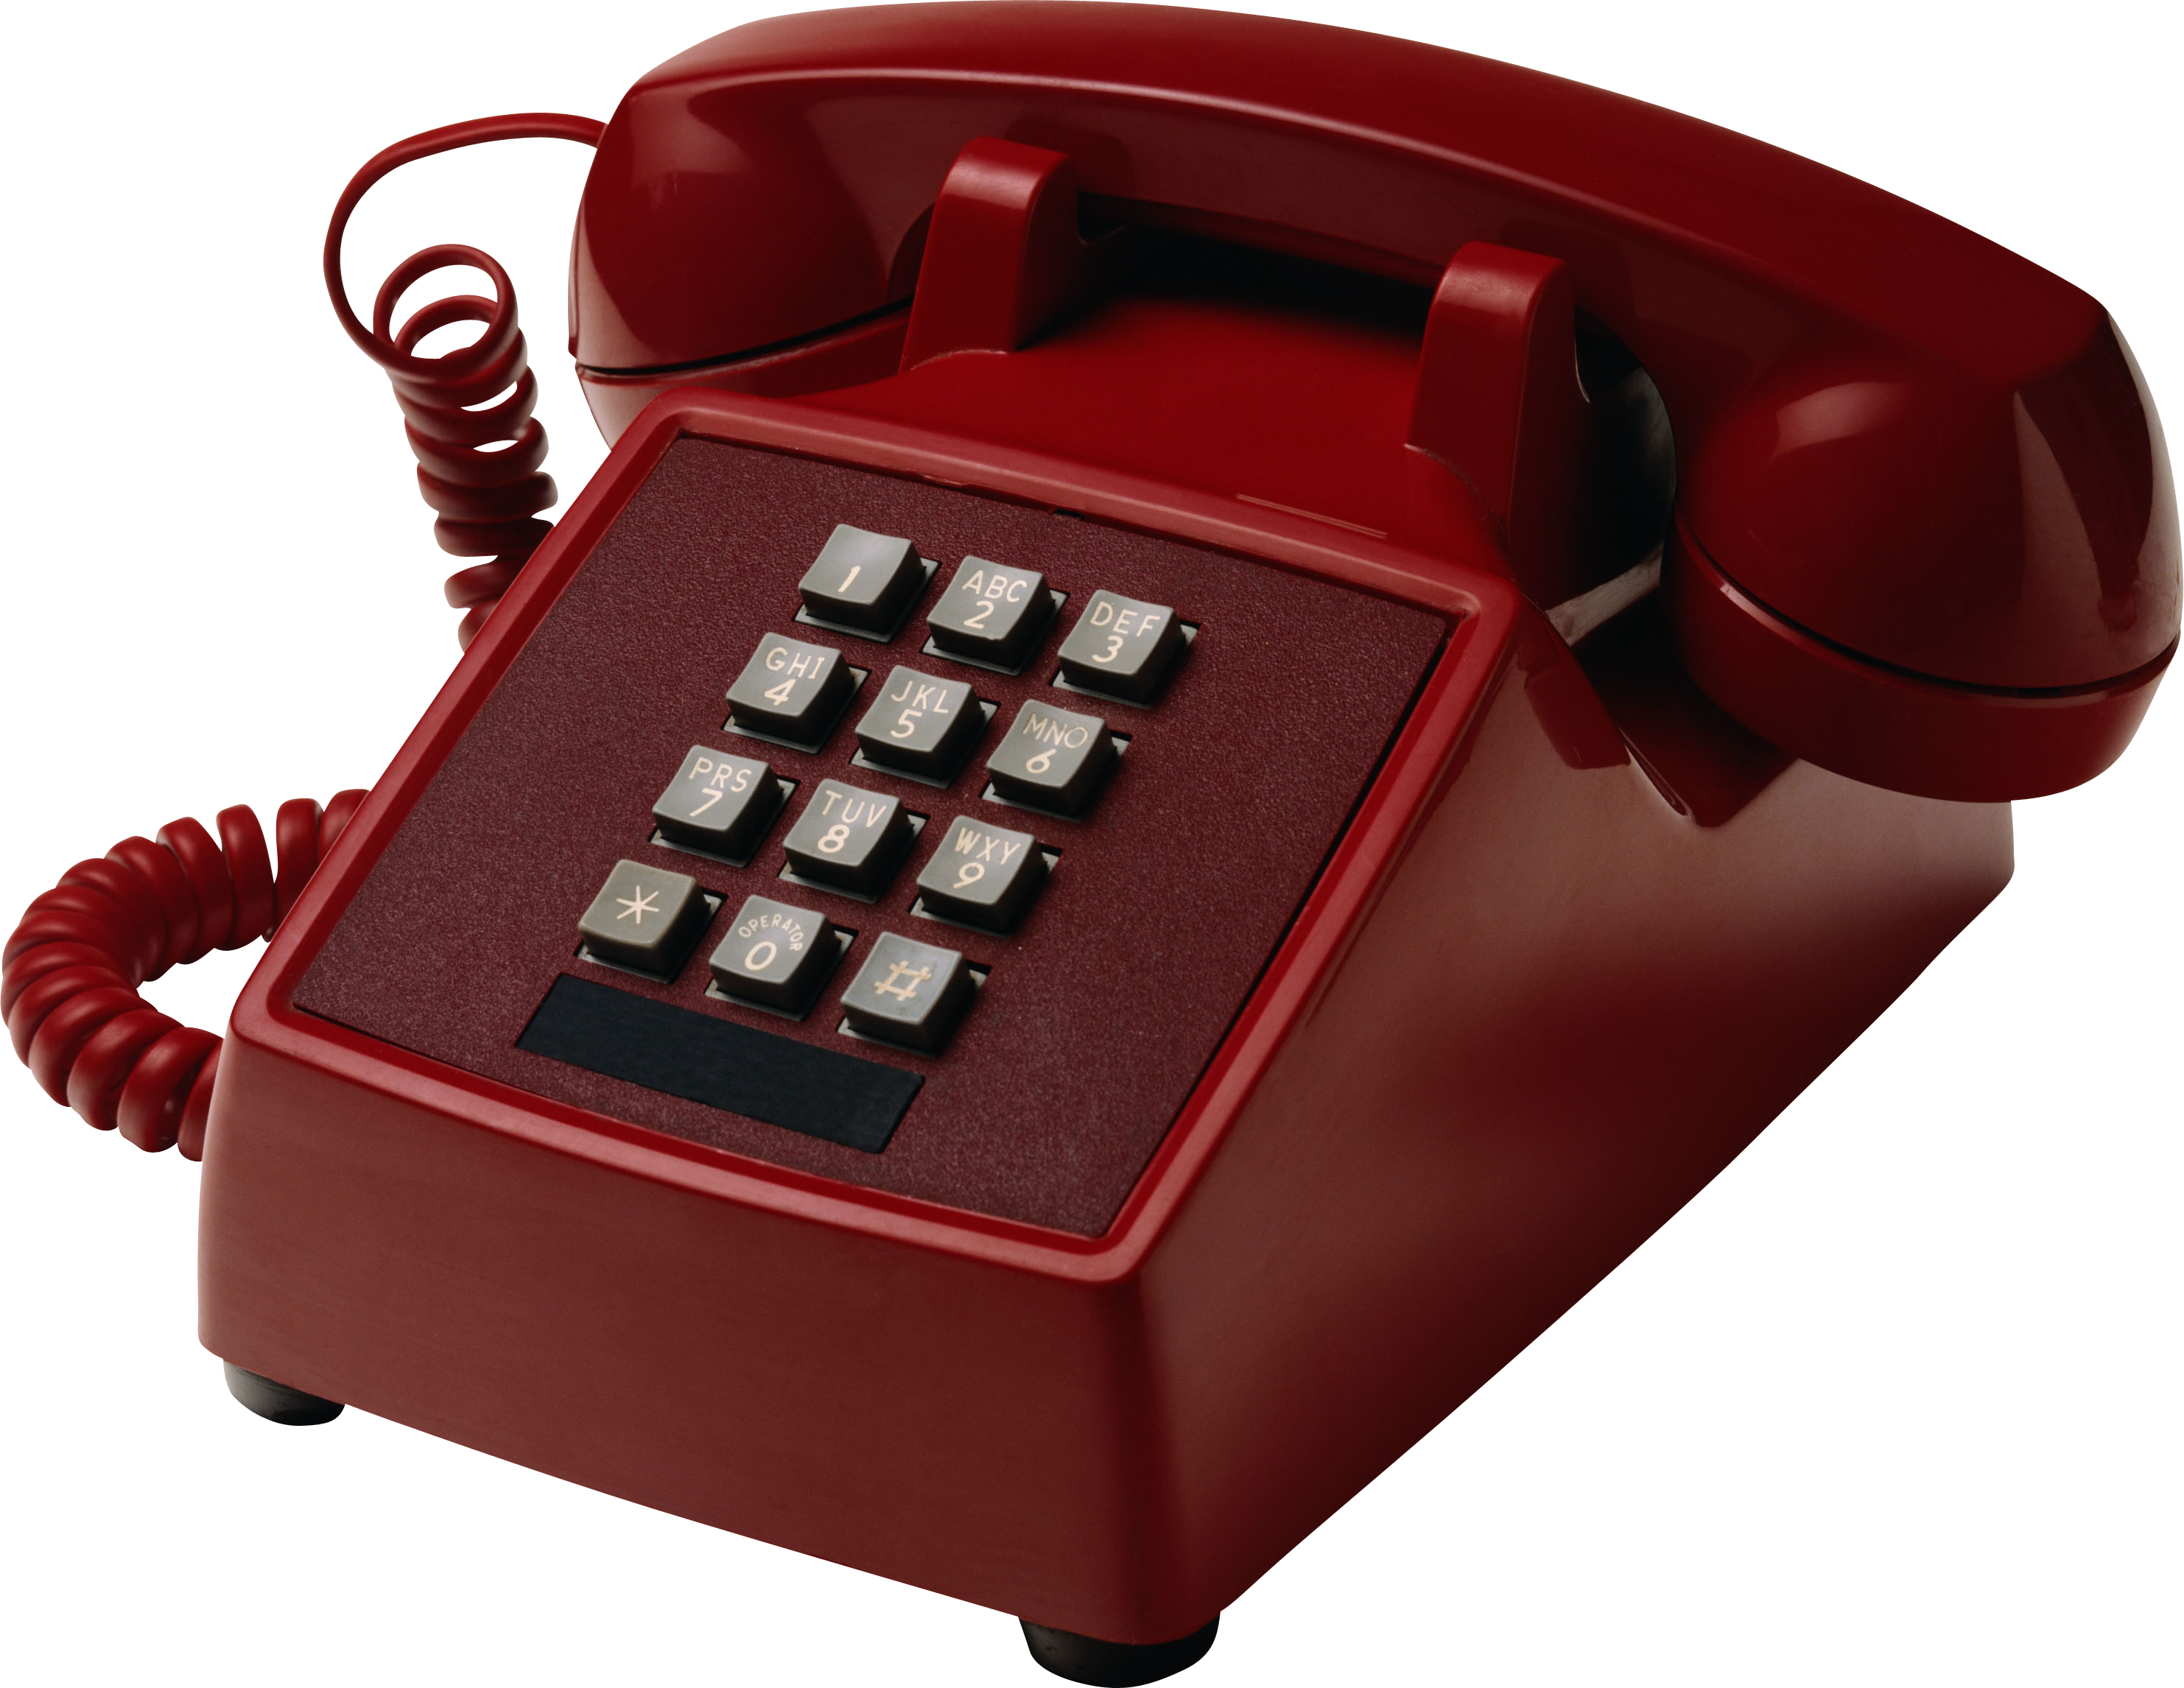 Телефон. Домашний телефон. Красный телефон. Телефонный аппарат на прозрачном фоне.